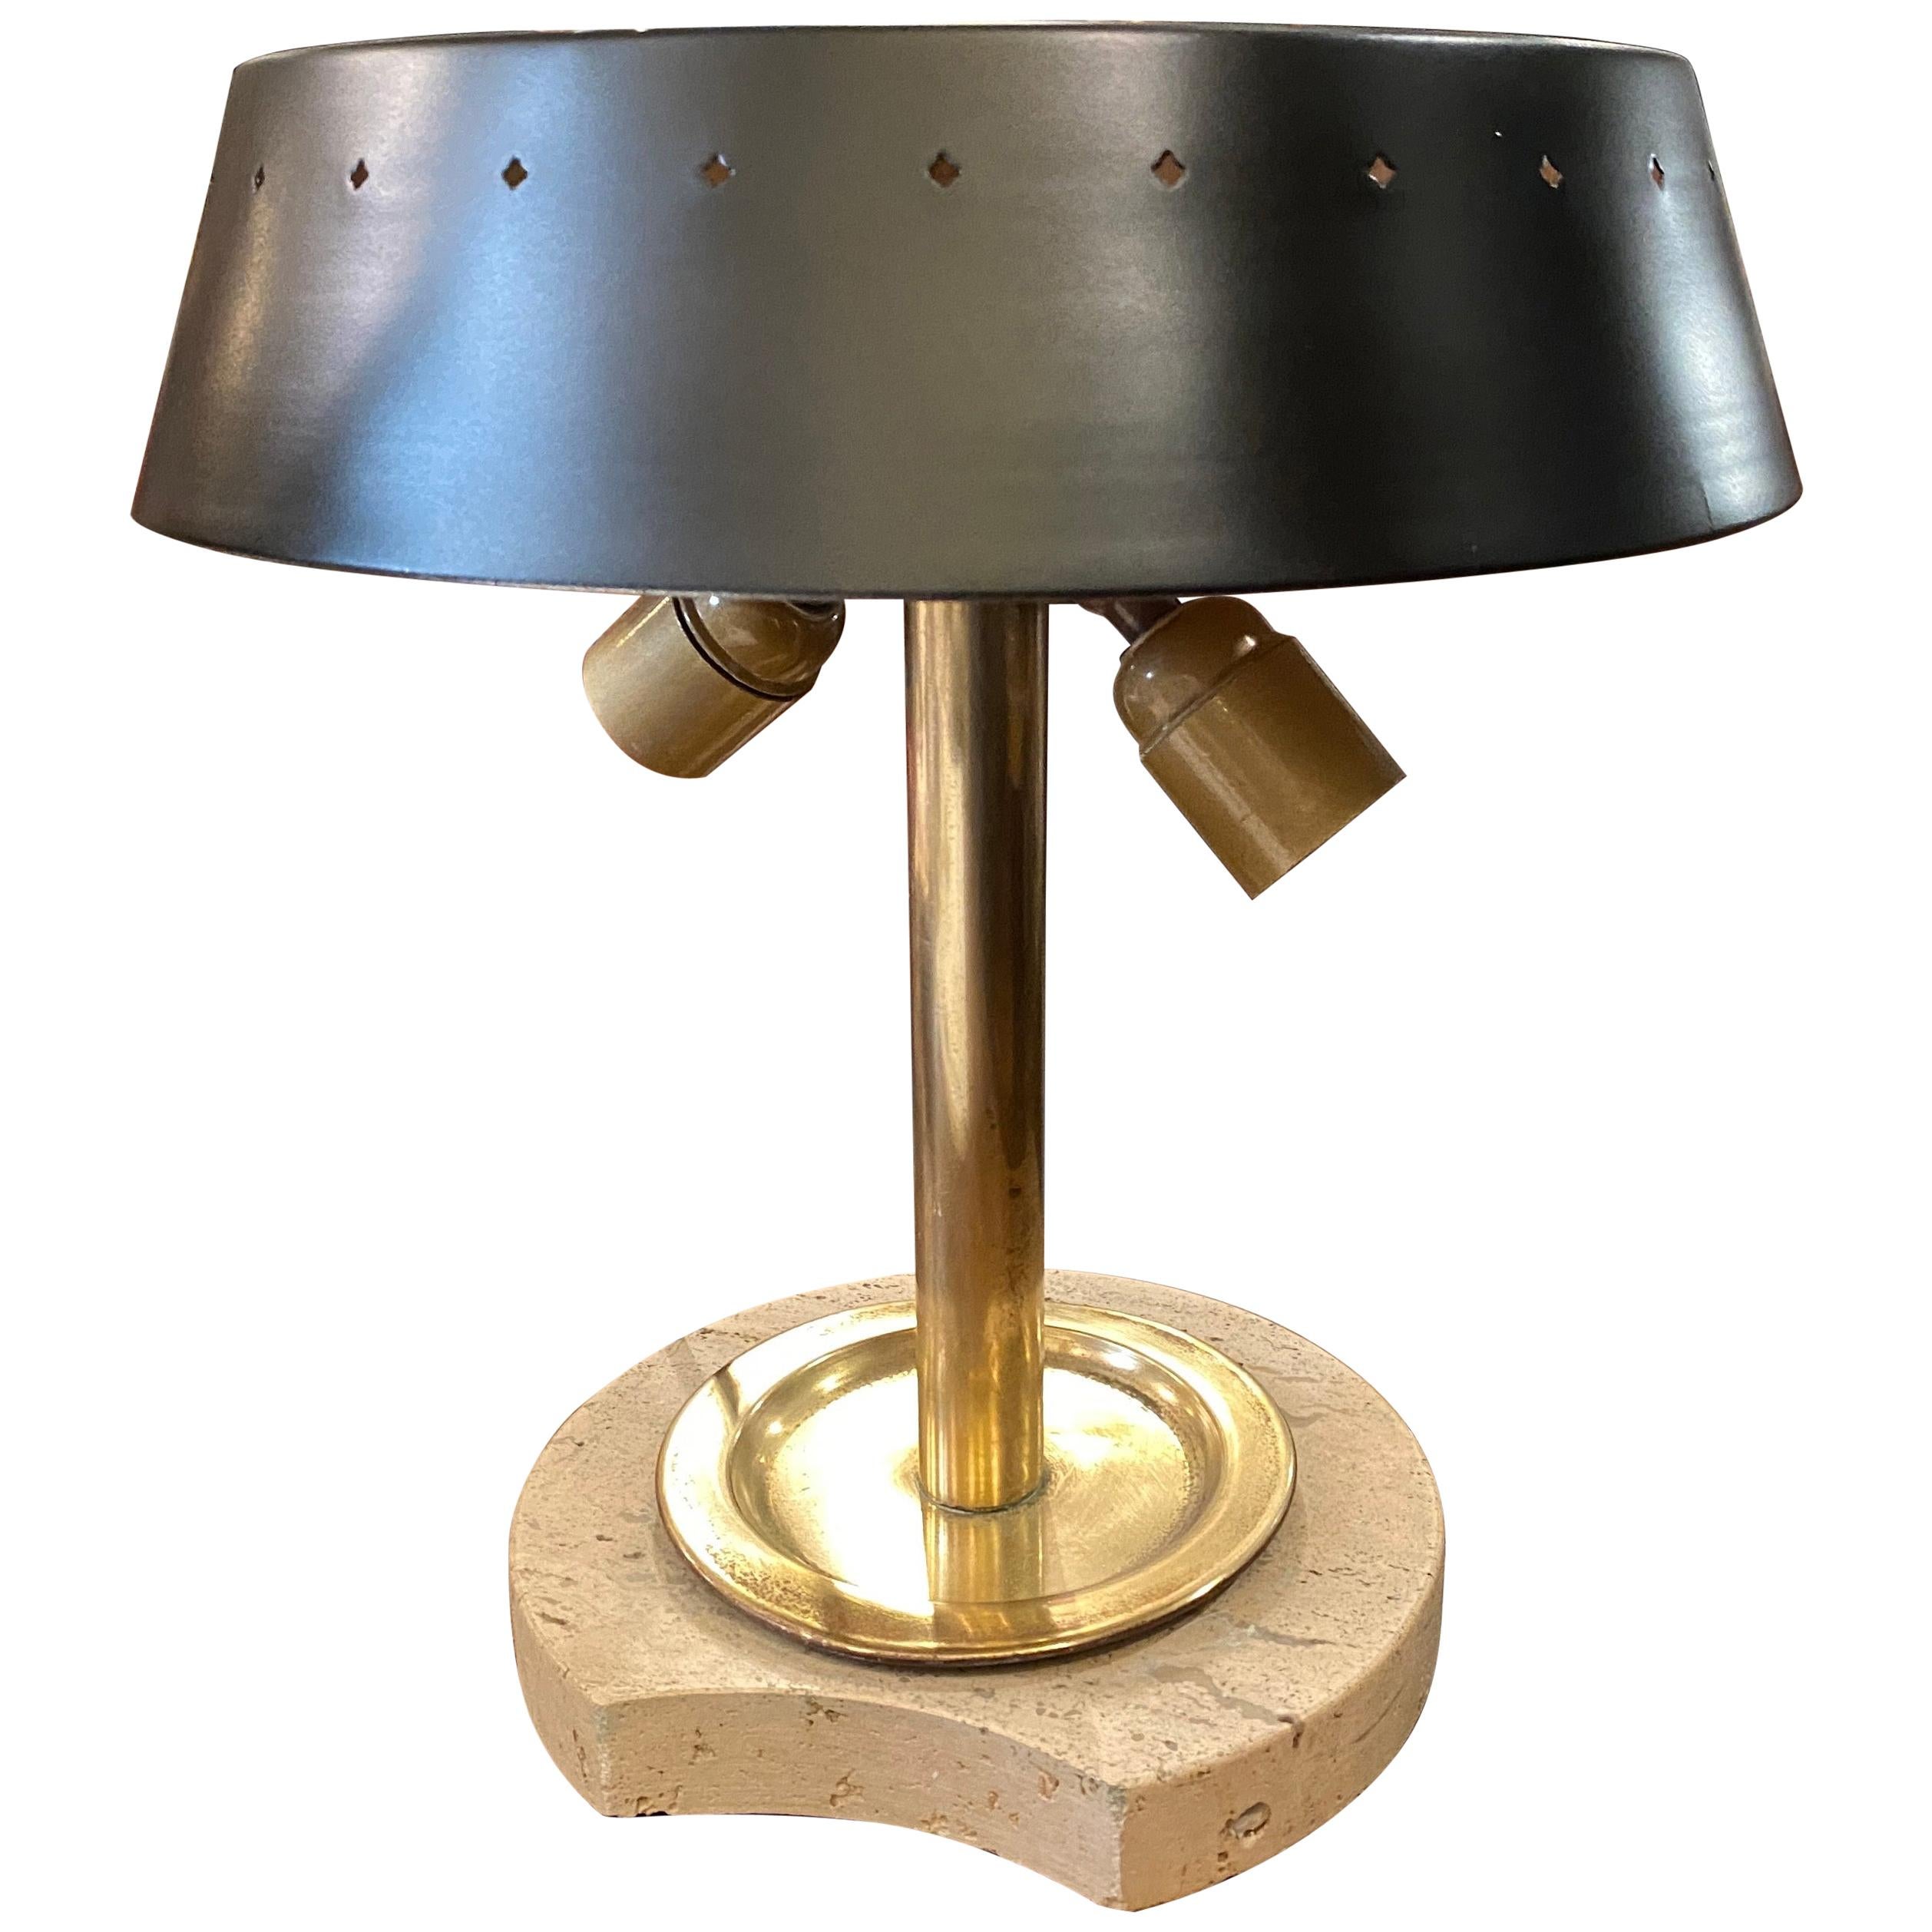 1960s Mid-Century Modern Travertine Marble and Brass Italian Table Lamp (lampe de table italienne en marbre travertin et laiton)